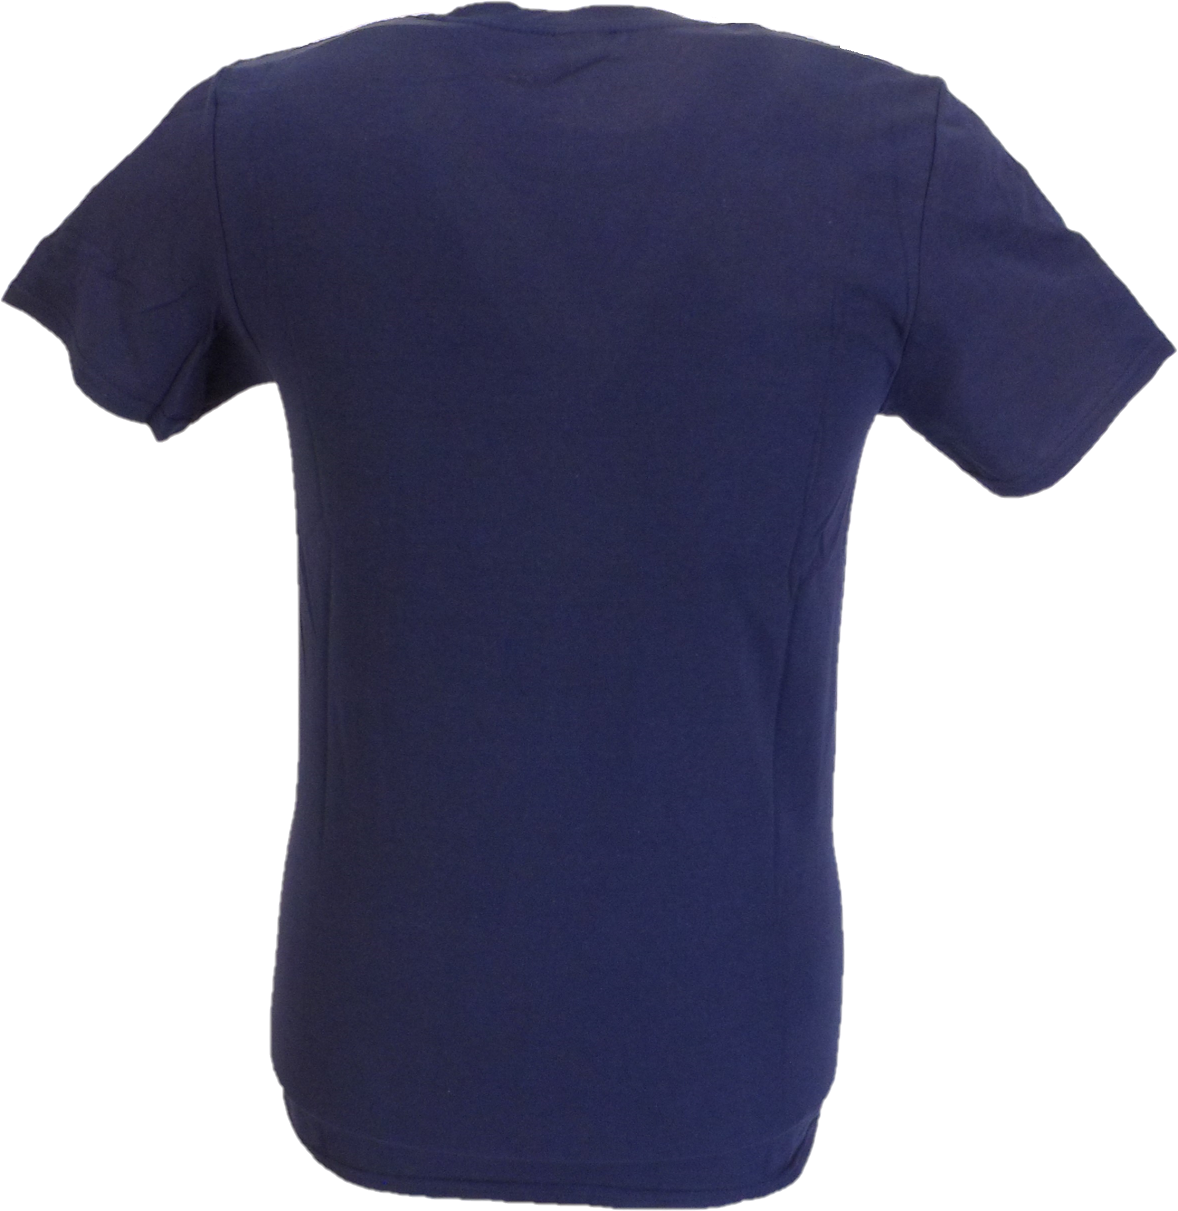 Camiseta oficial Madness rayas azul marino para hombre